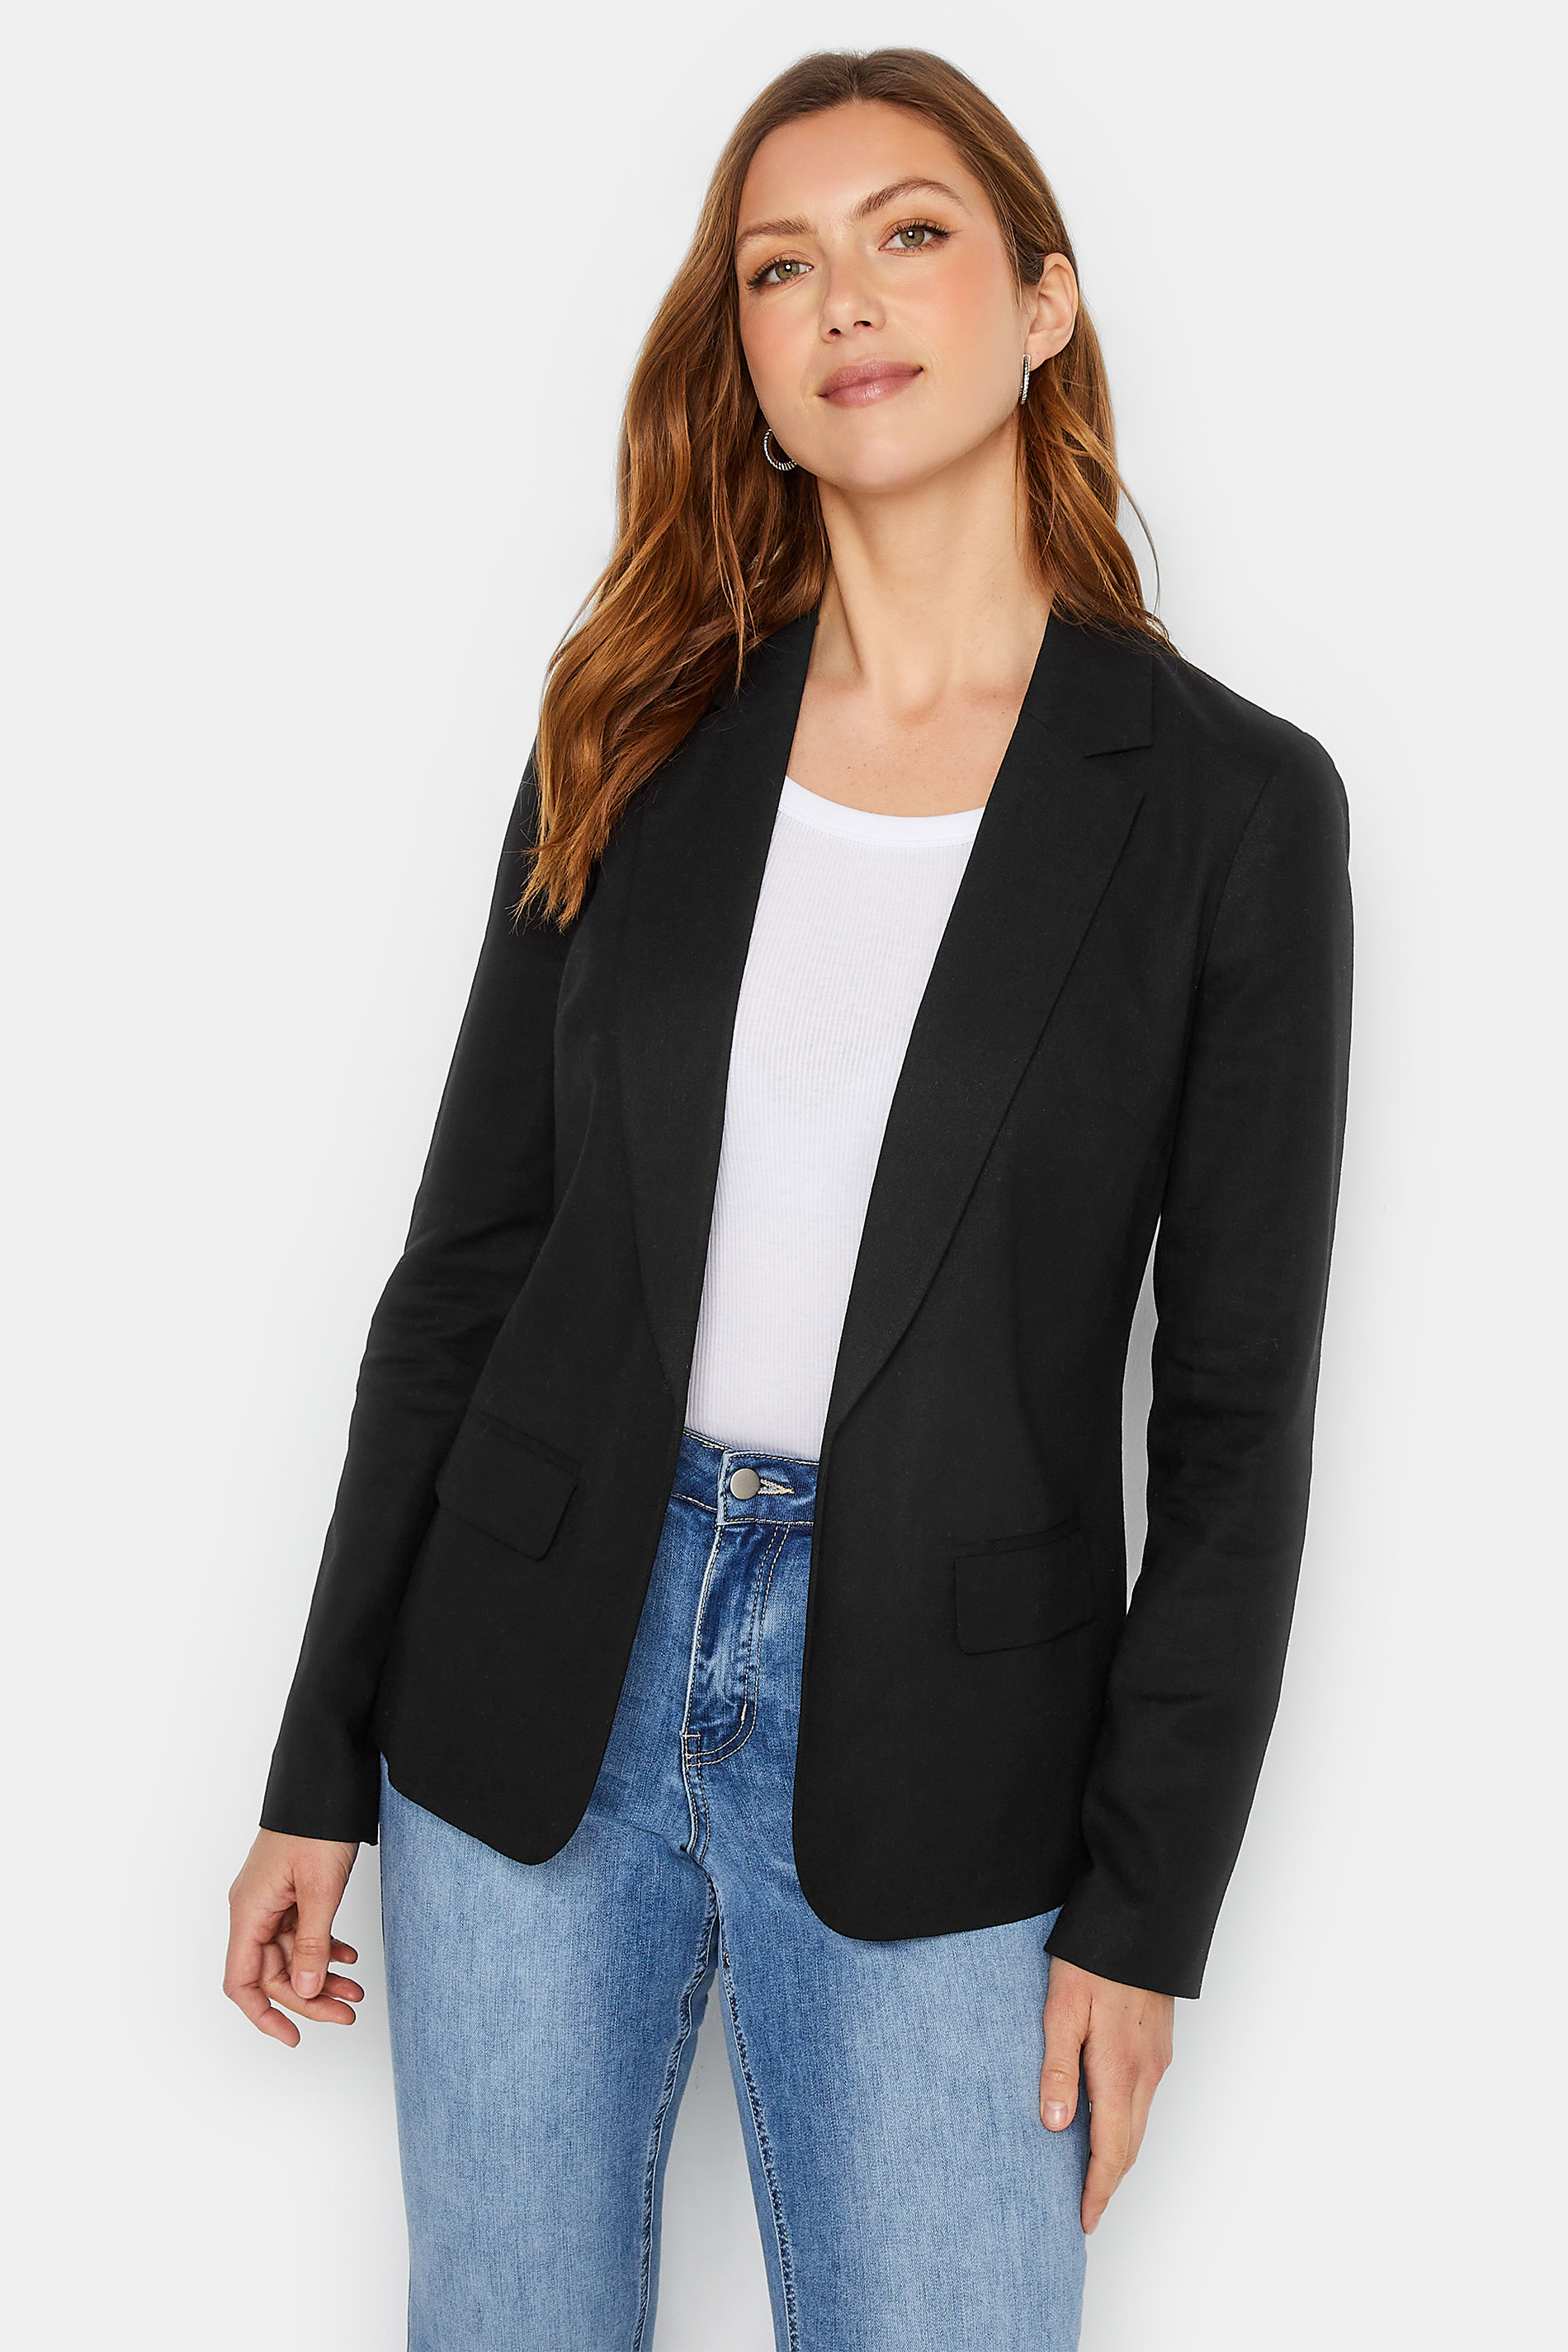 LTS Tall Black Linen Look Blazer Jacket | Long Tall Sally  1